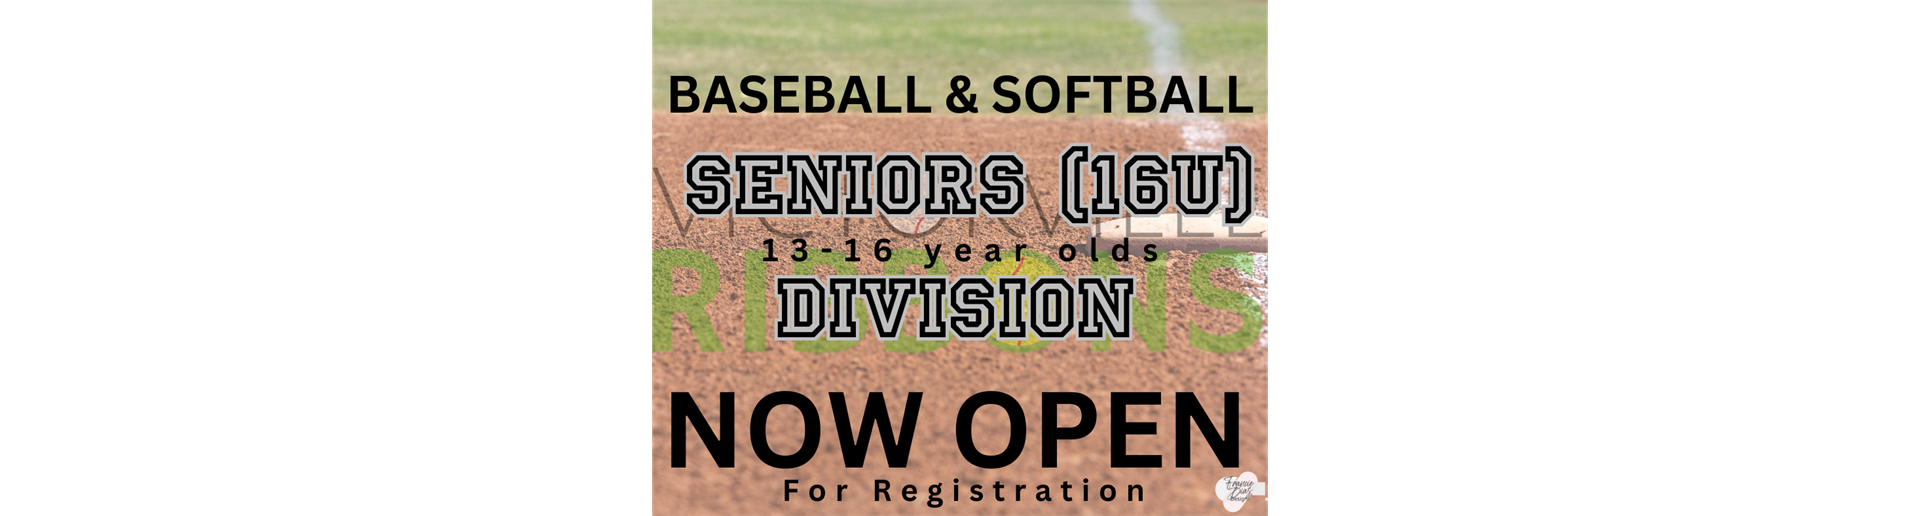 16U Senior Division Registration Open